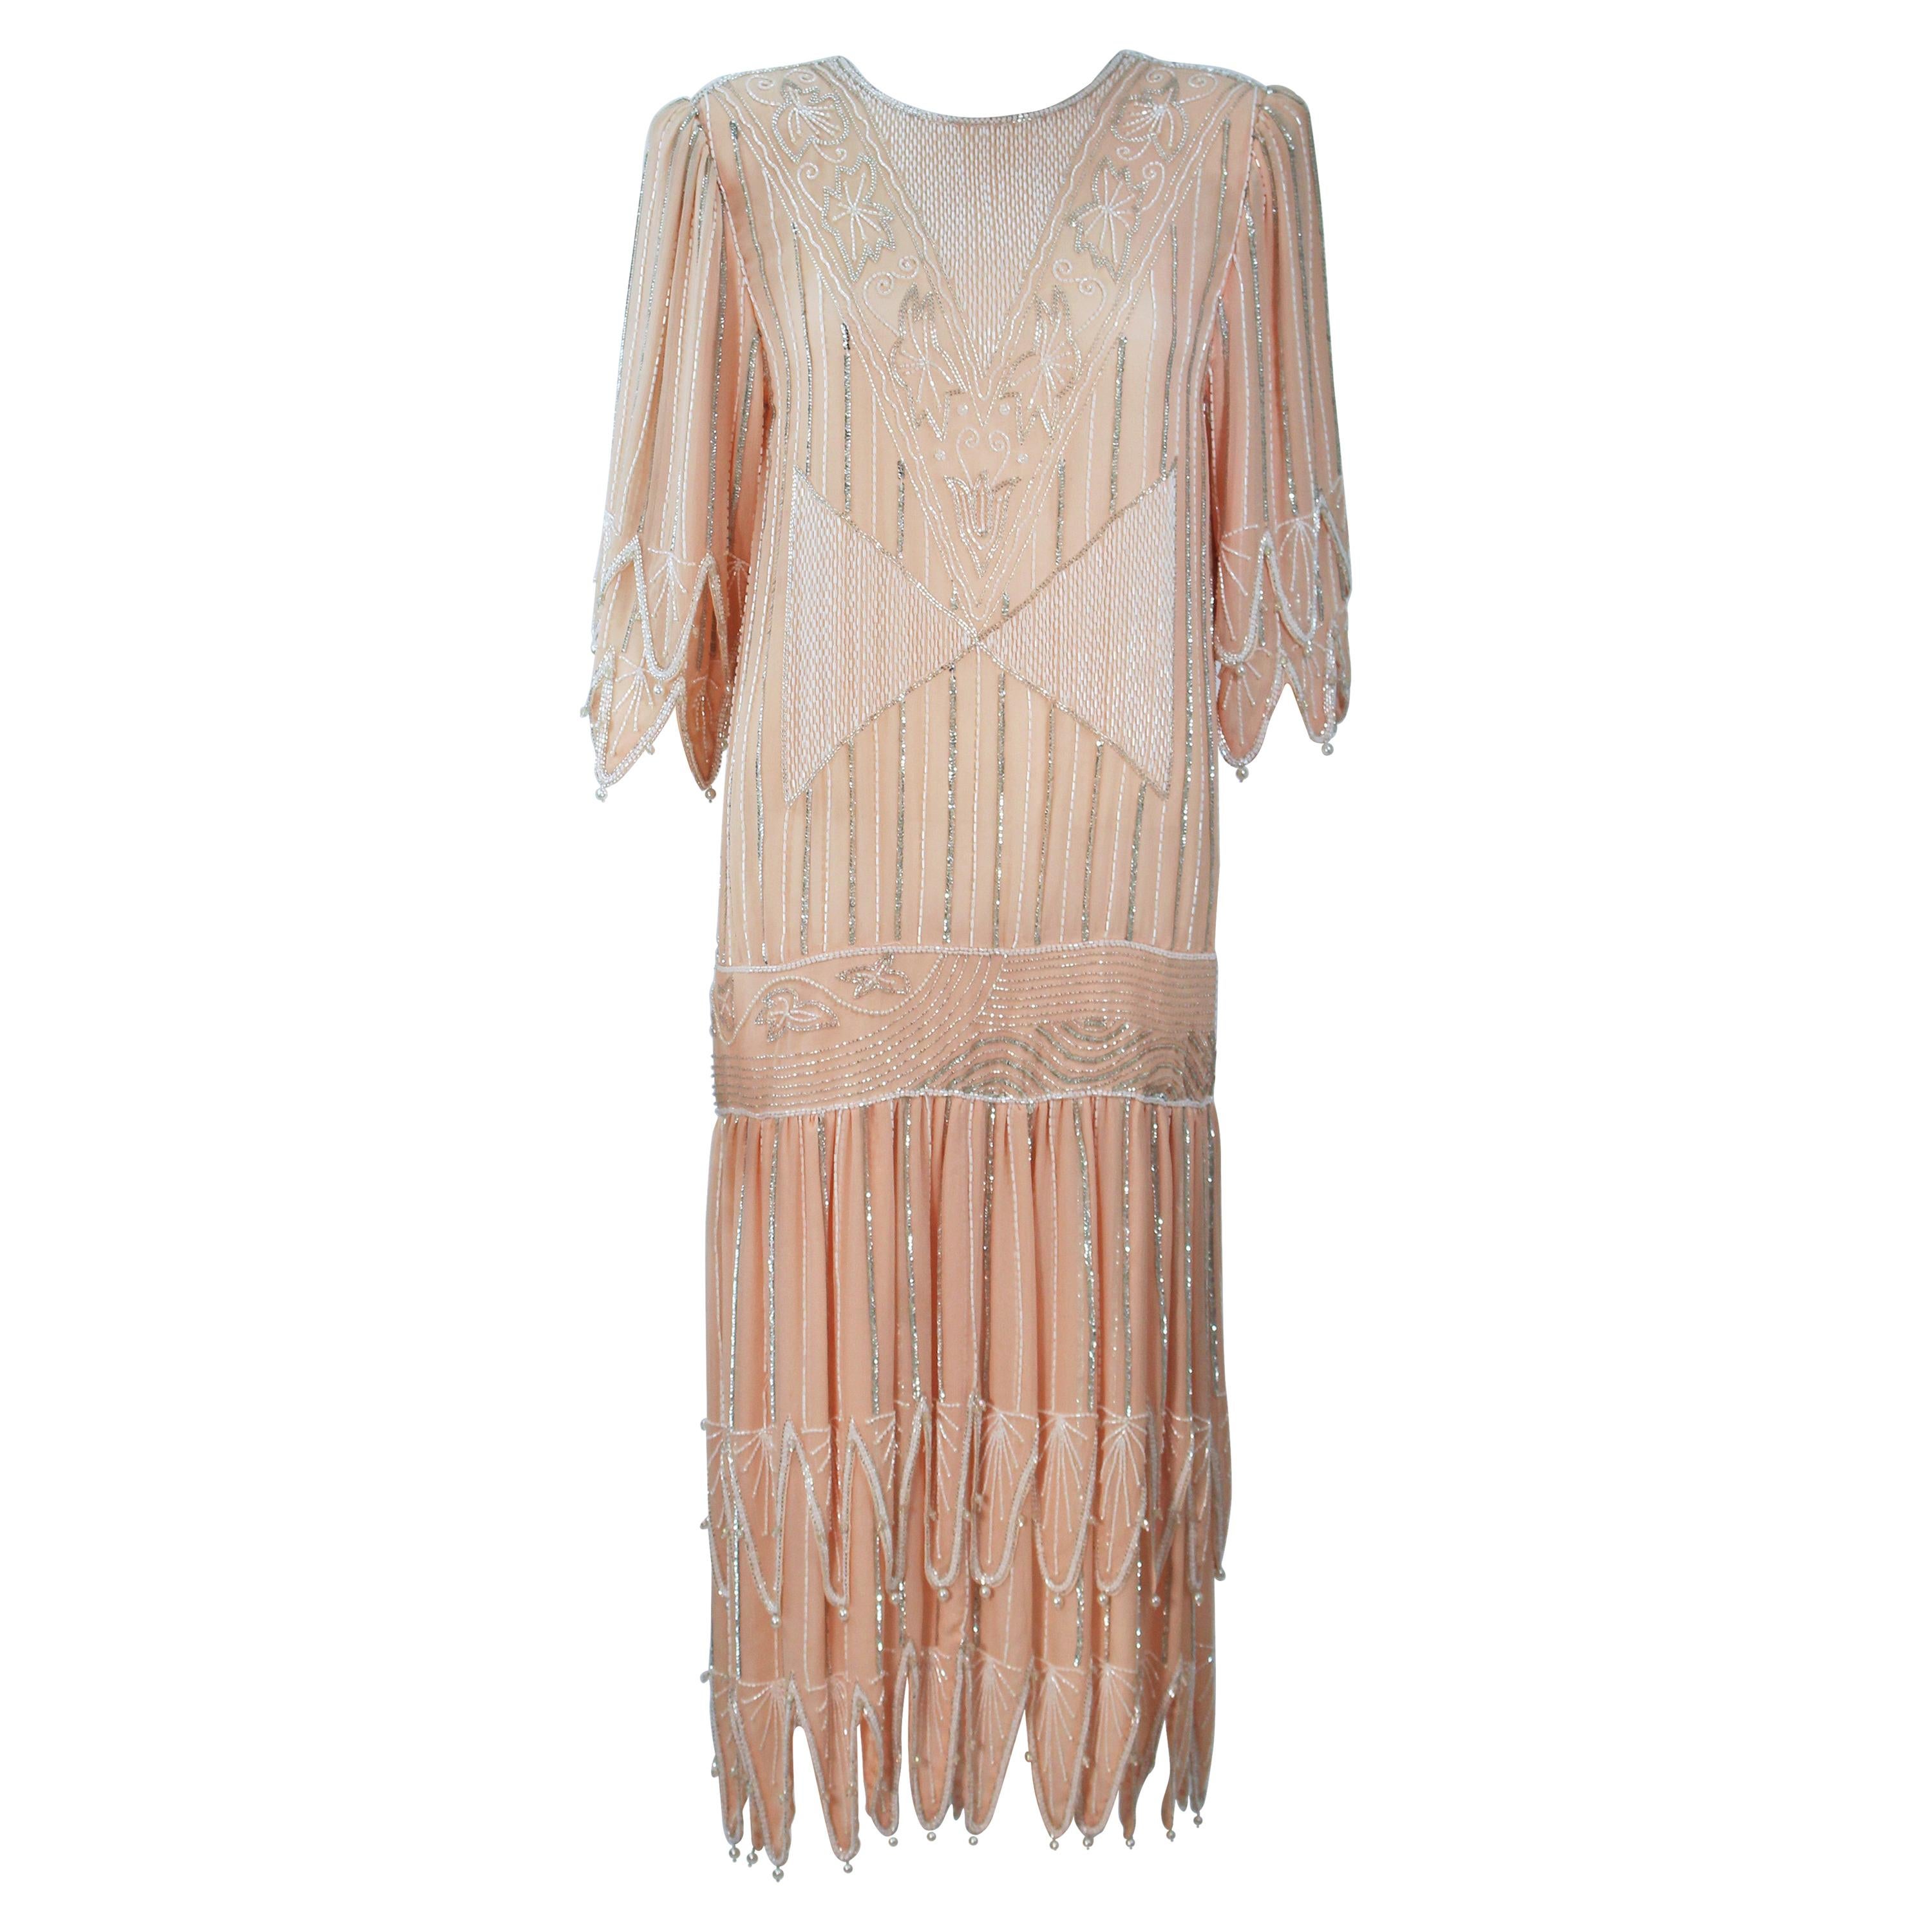 Judith Ann Creations 1920s Style Silk Peach Beaded Flapper Dress